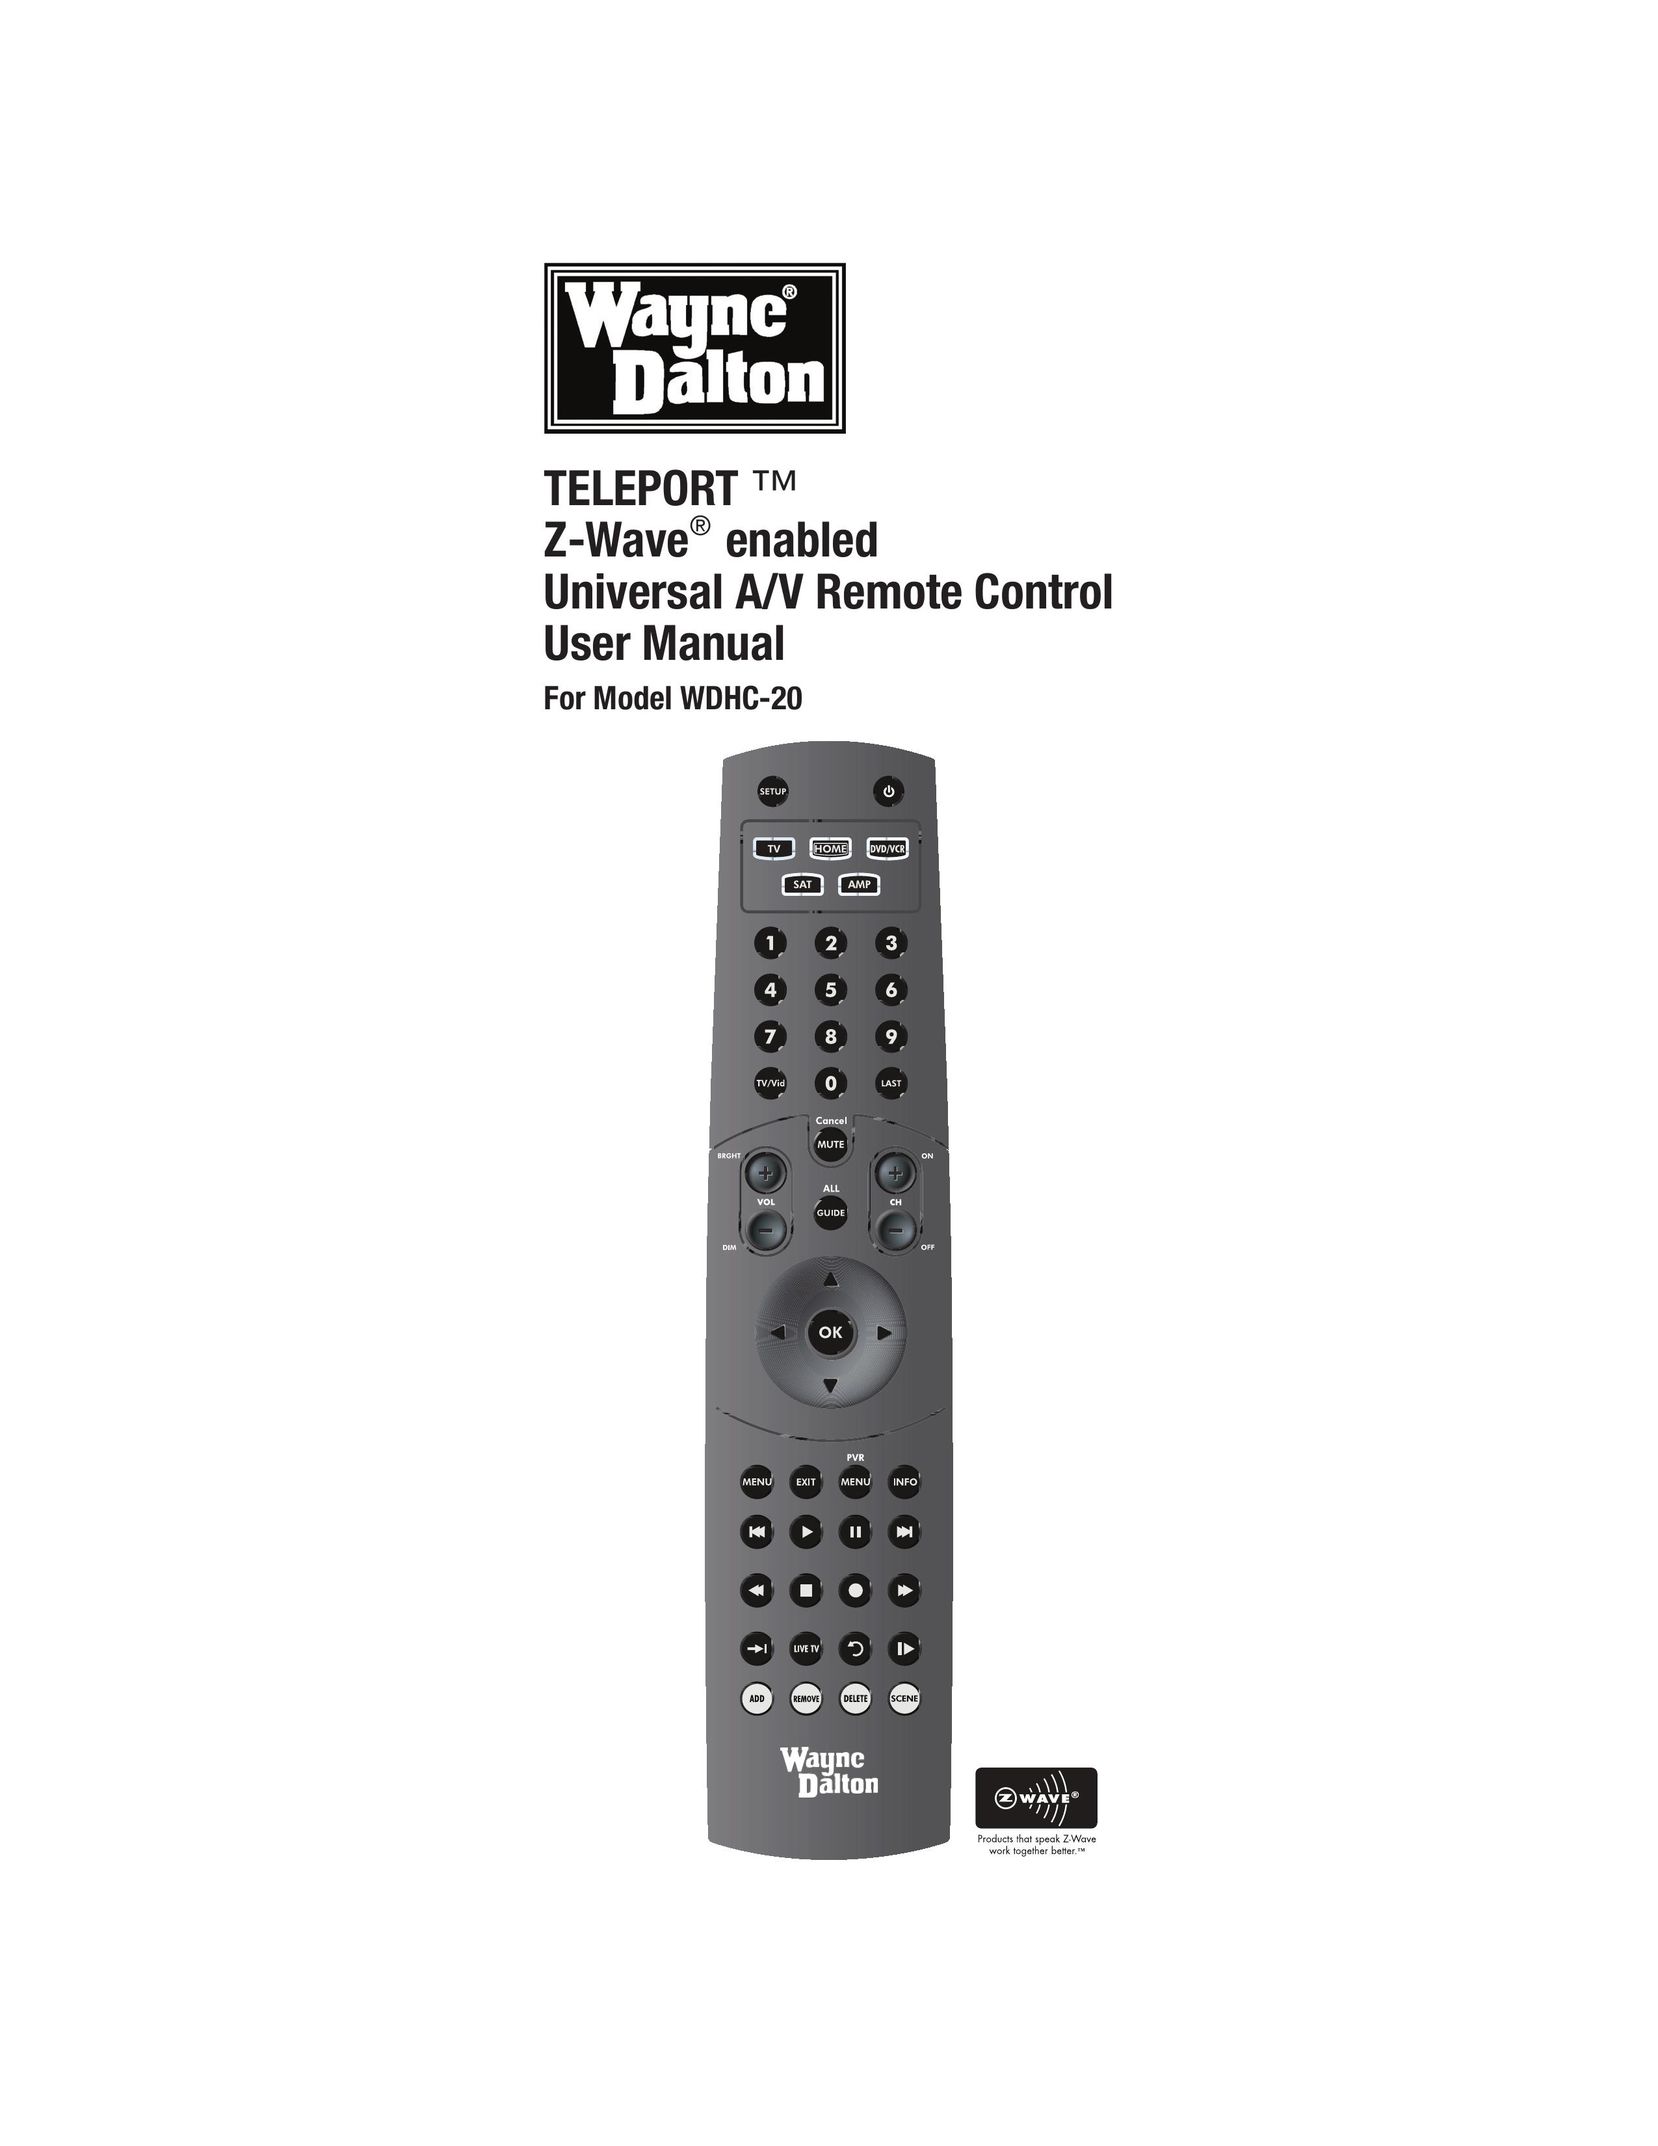 Wayne-Dalton WDHC-20 Universal Remote User Manual